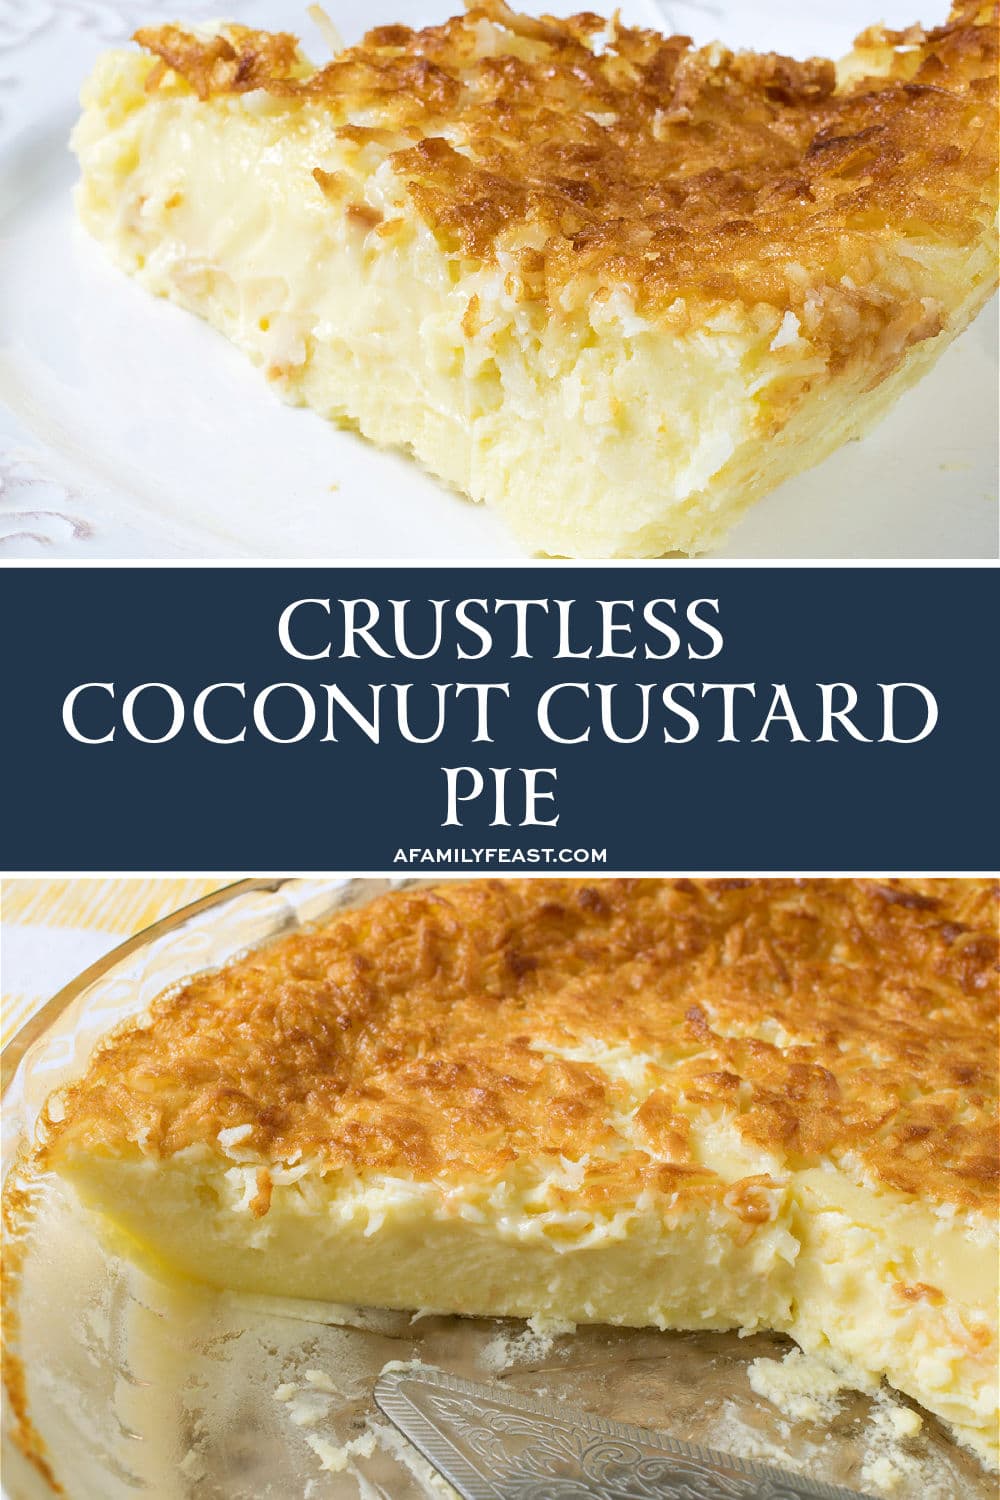 Crustless Coconut Custard Pie